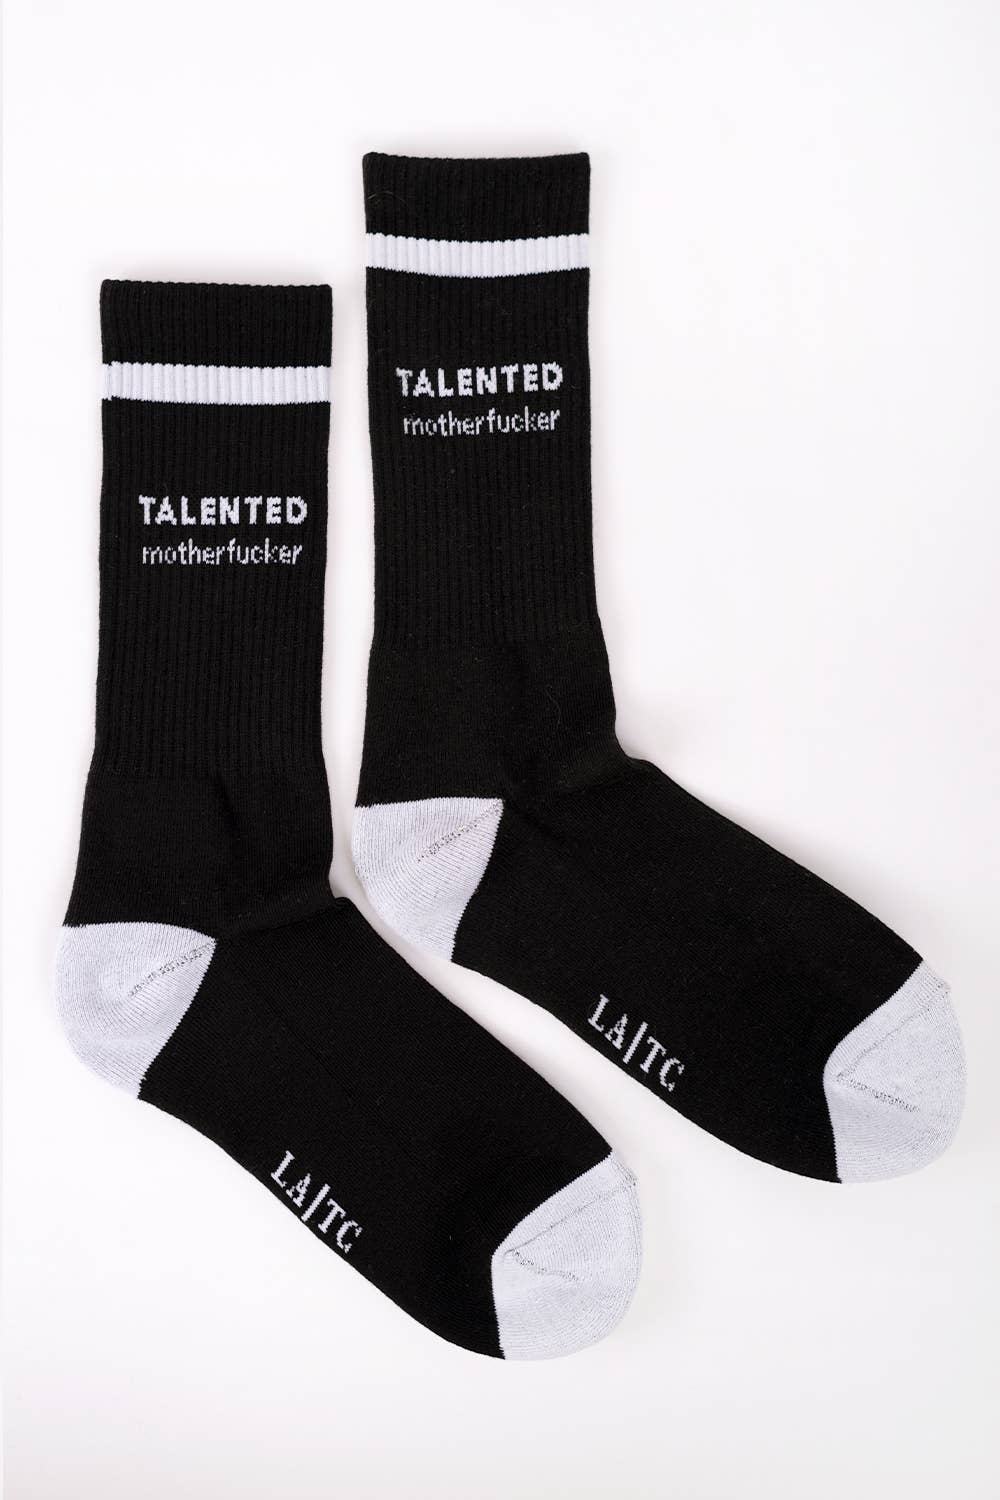 Talented MF sock